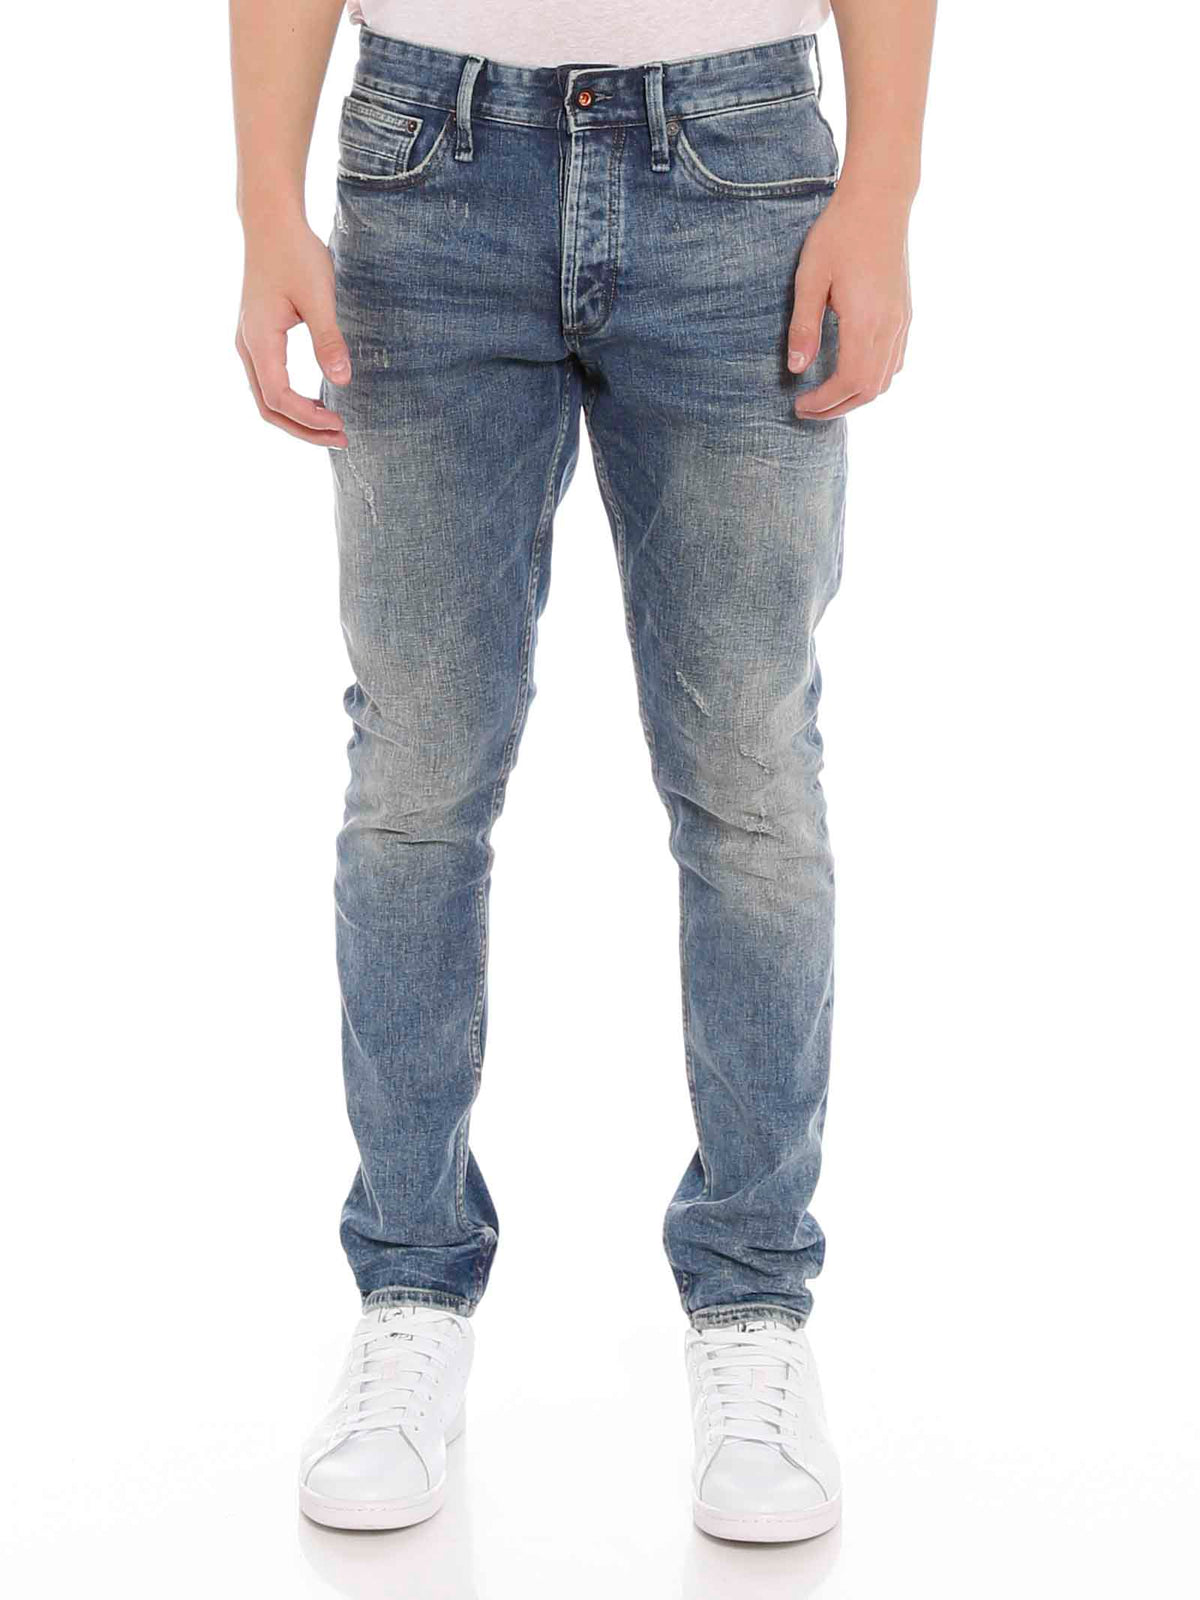 Shank AVS Jeans in Blue Denim